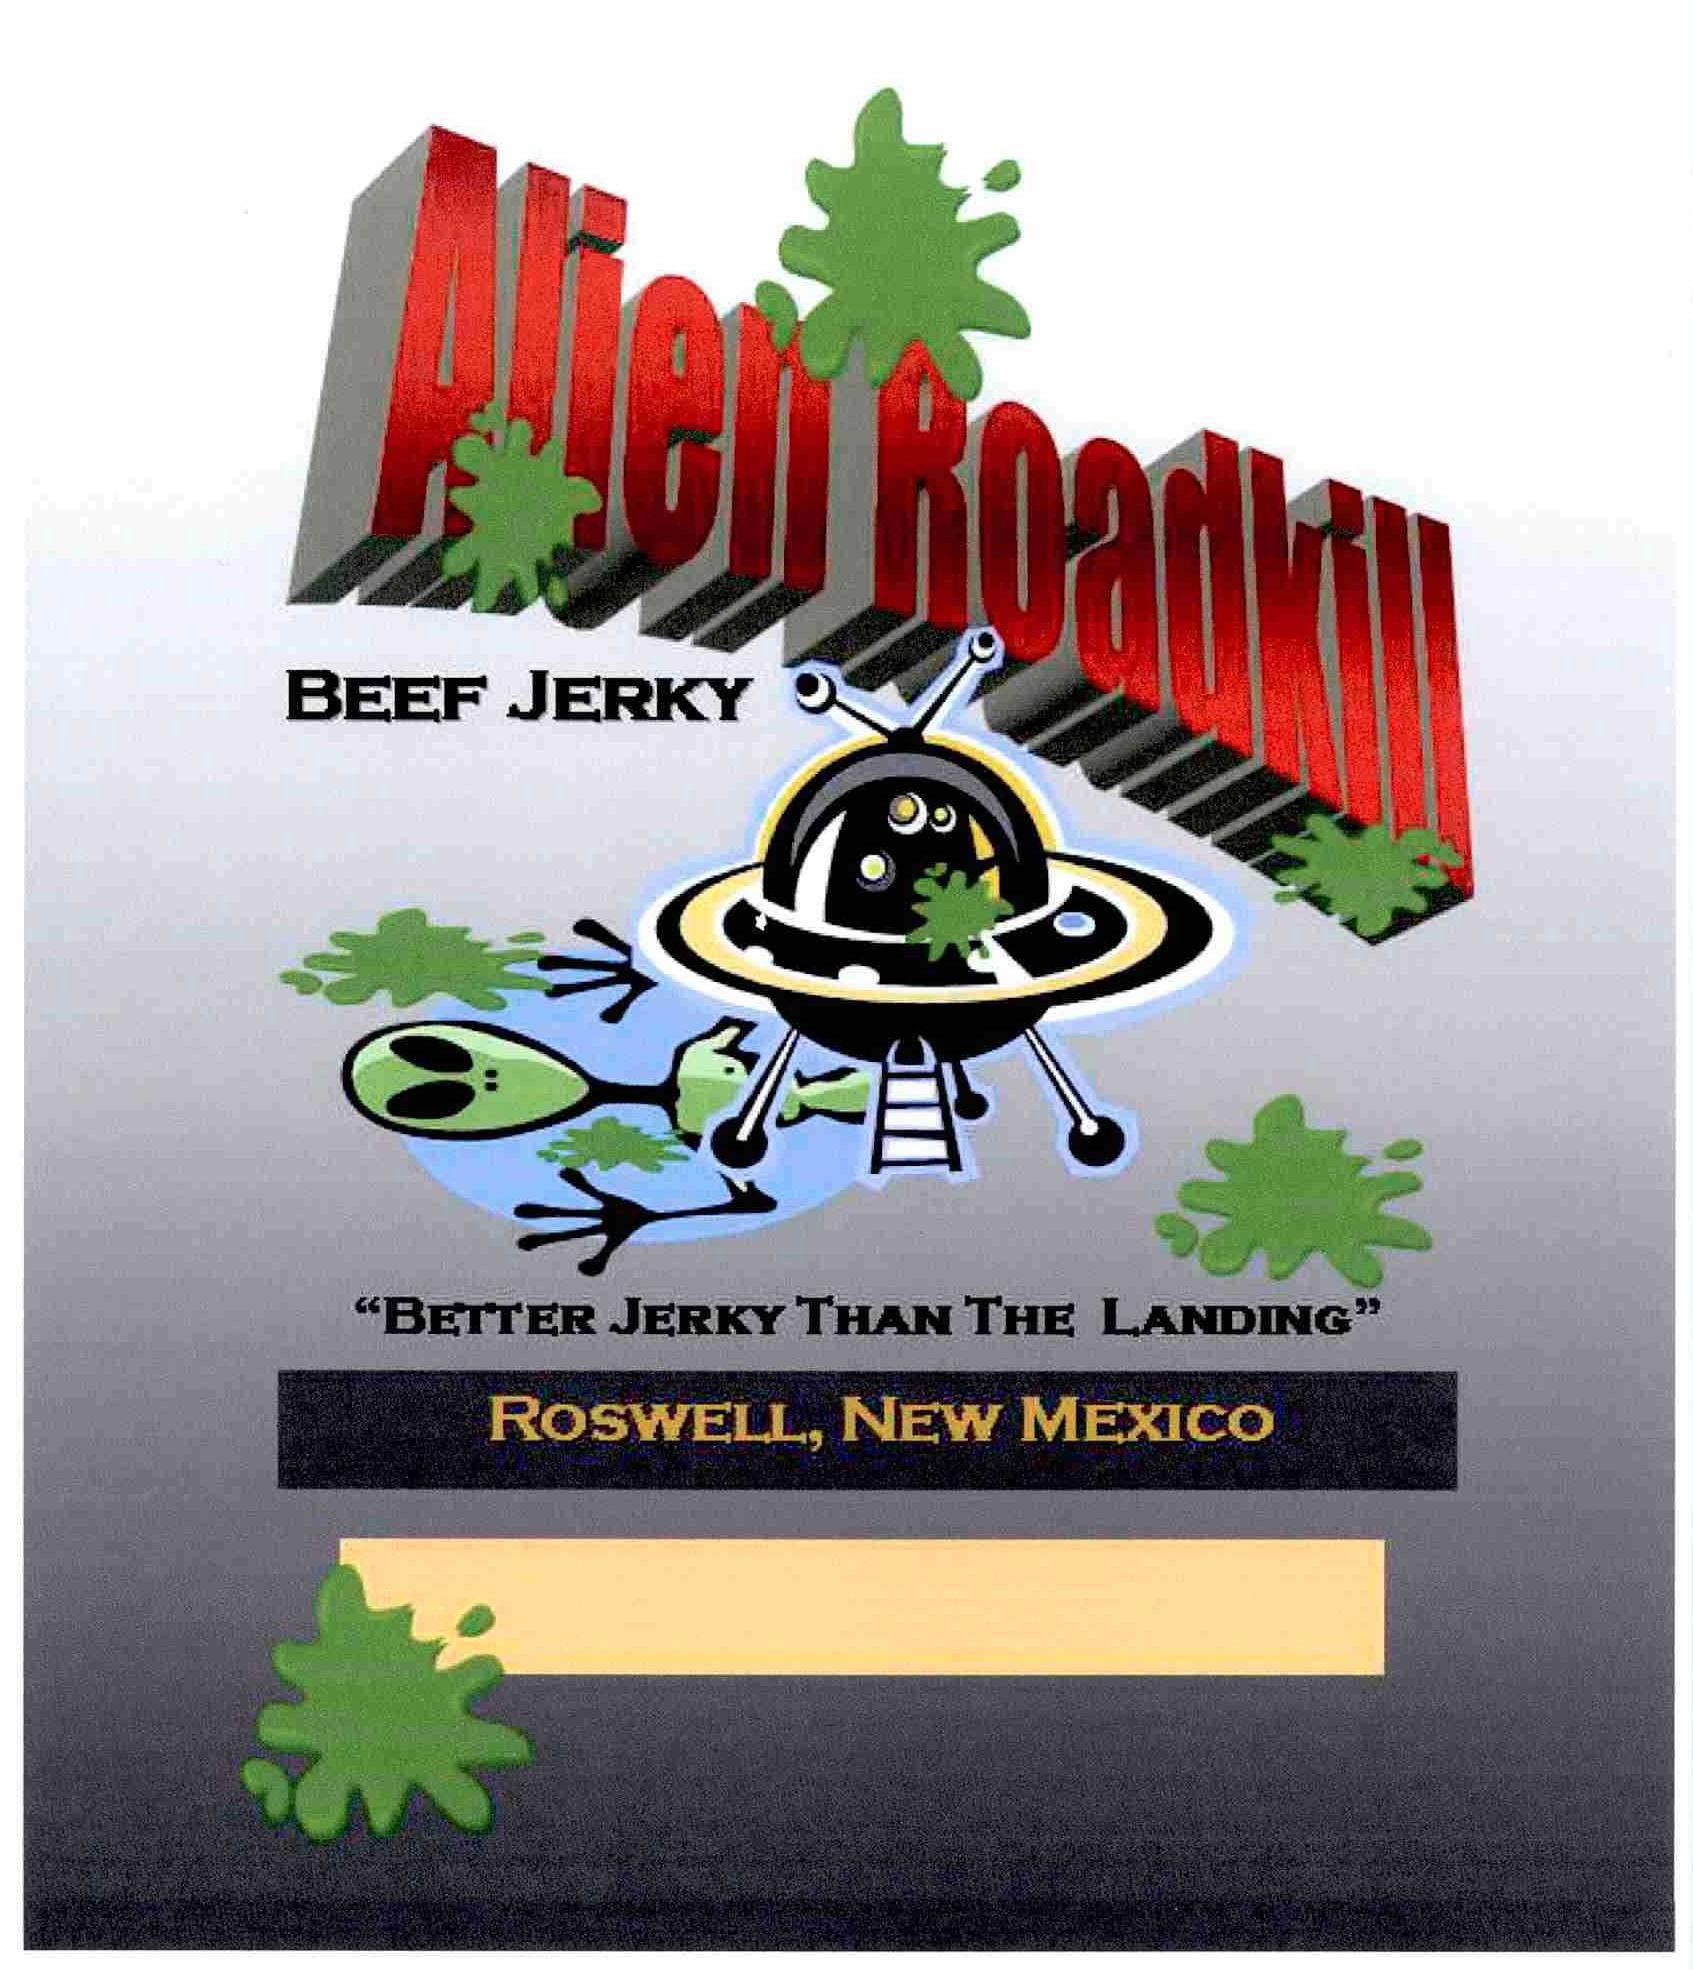  ALIEN ROADKILL BEEF JERKY "BETTER JERKY THAN THE LANDING" ROSWELL, NEW MEXICO